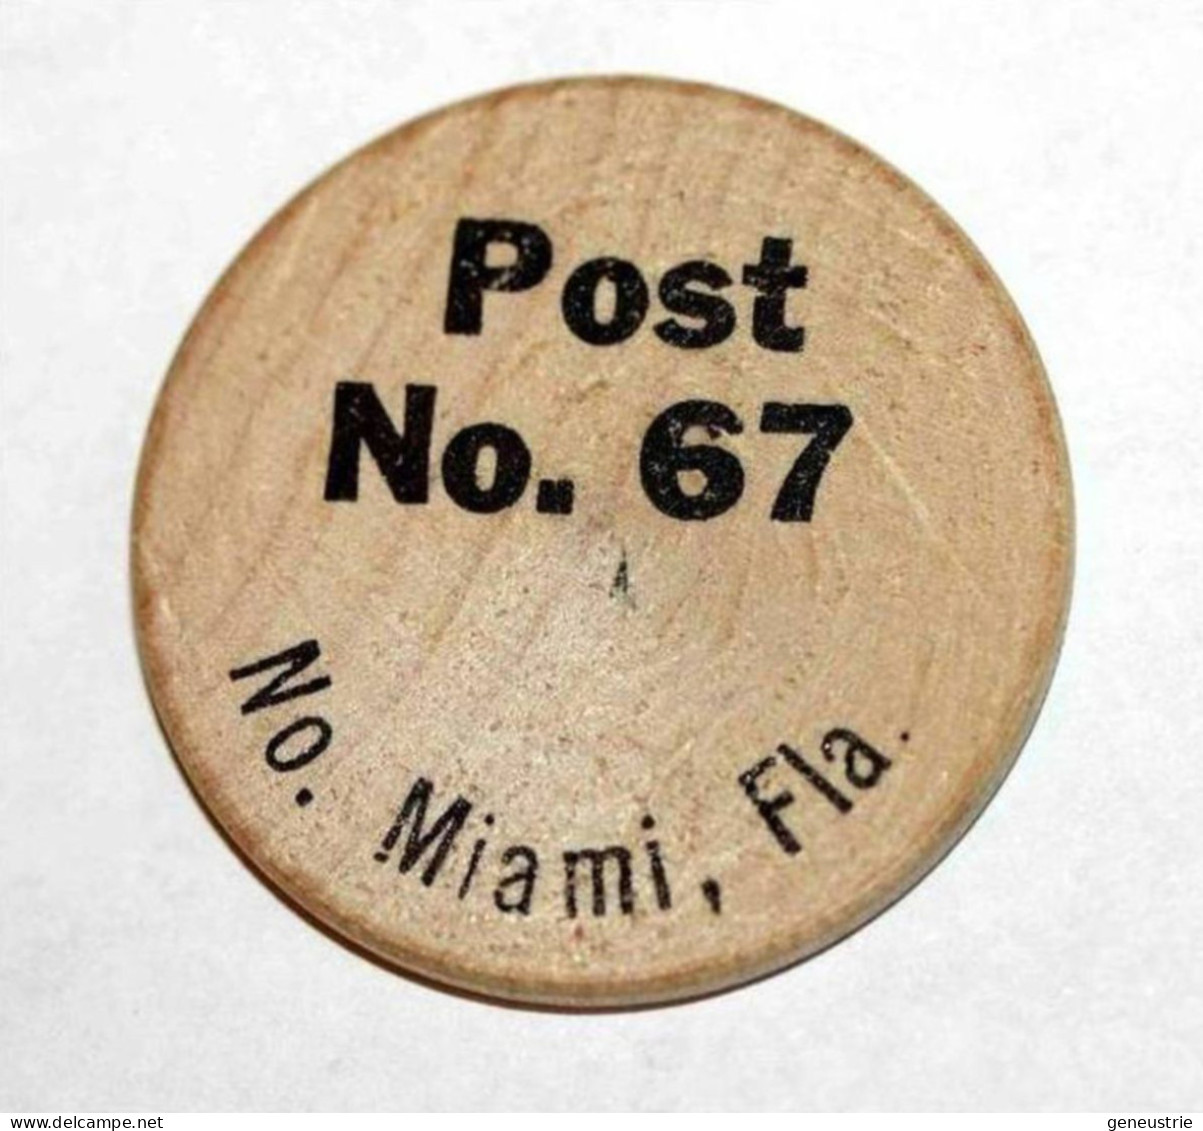 Wooden Token - Wooden Nickel - Jeton Bois Bison Monnaie Nécessité - Miami Floride - Etats-Unis - Monetary/Of Necessity